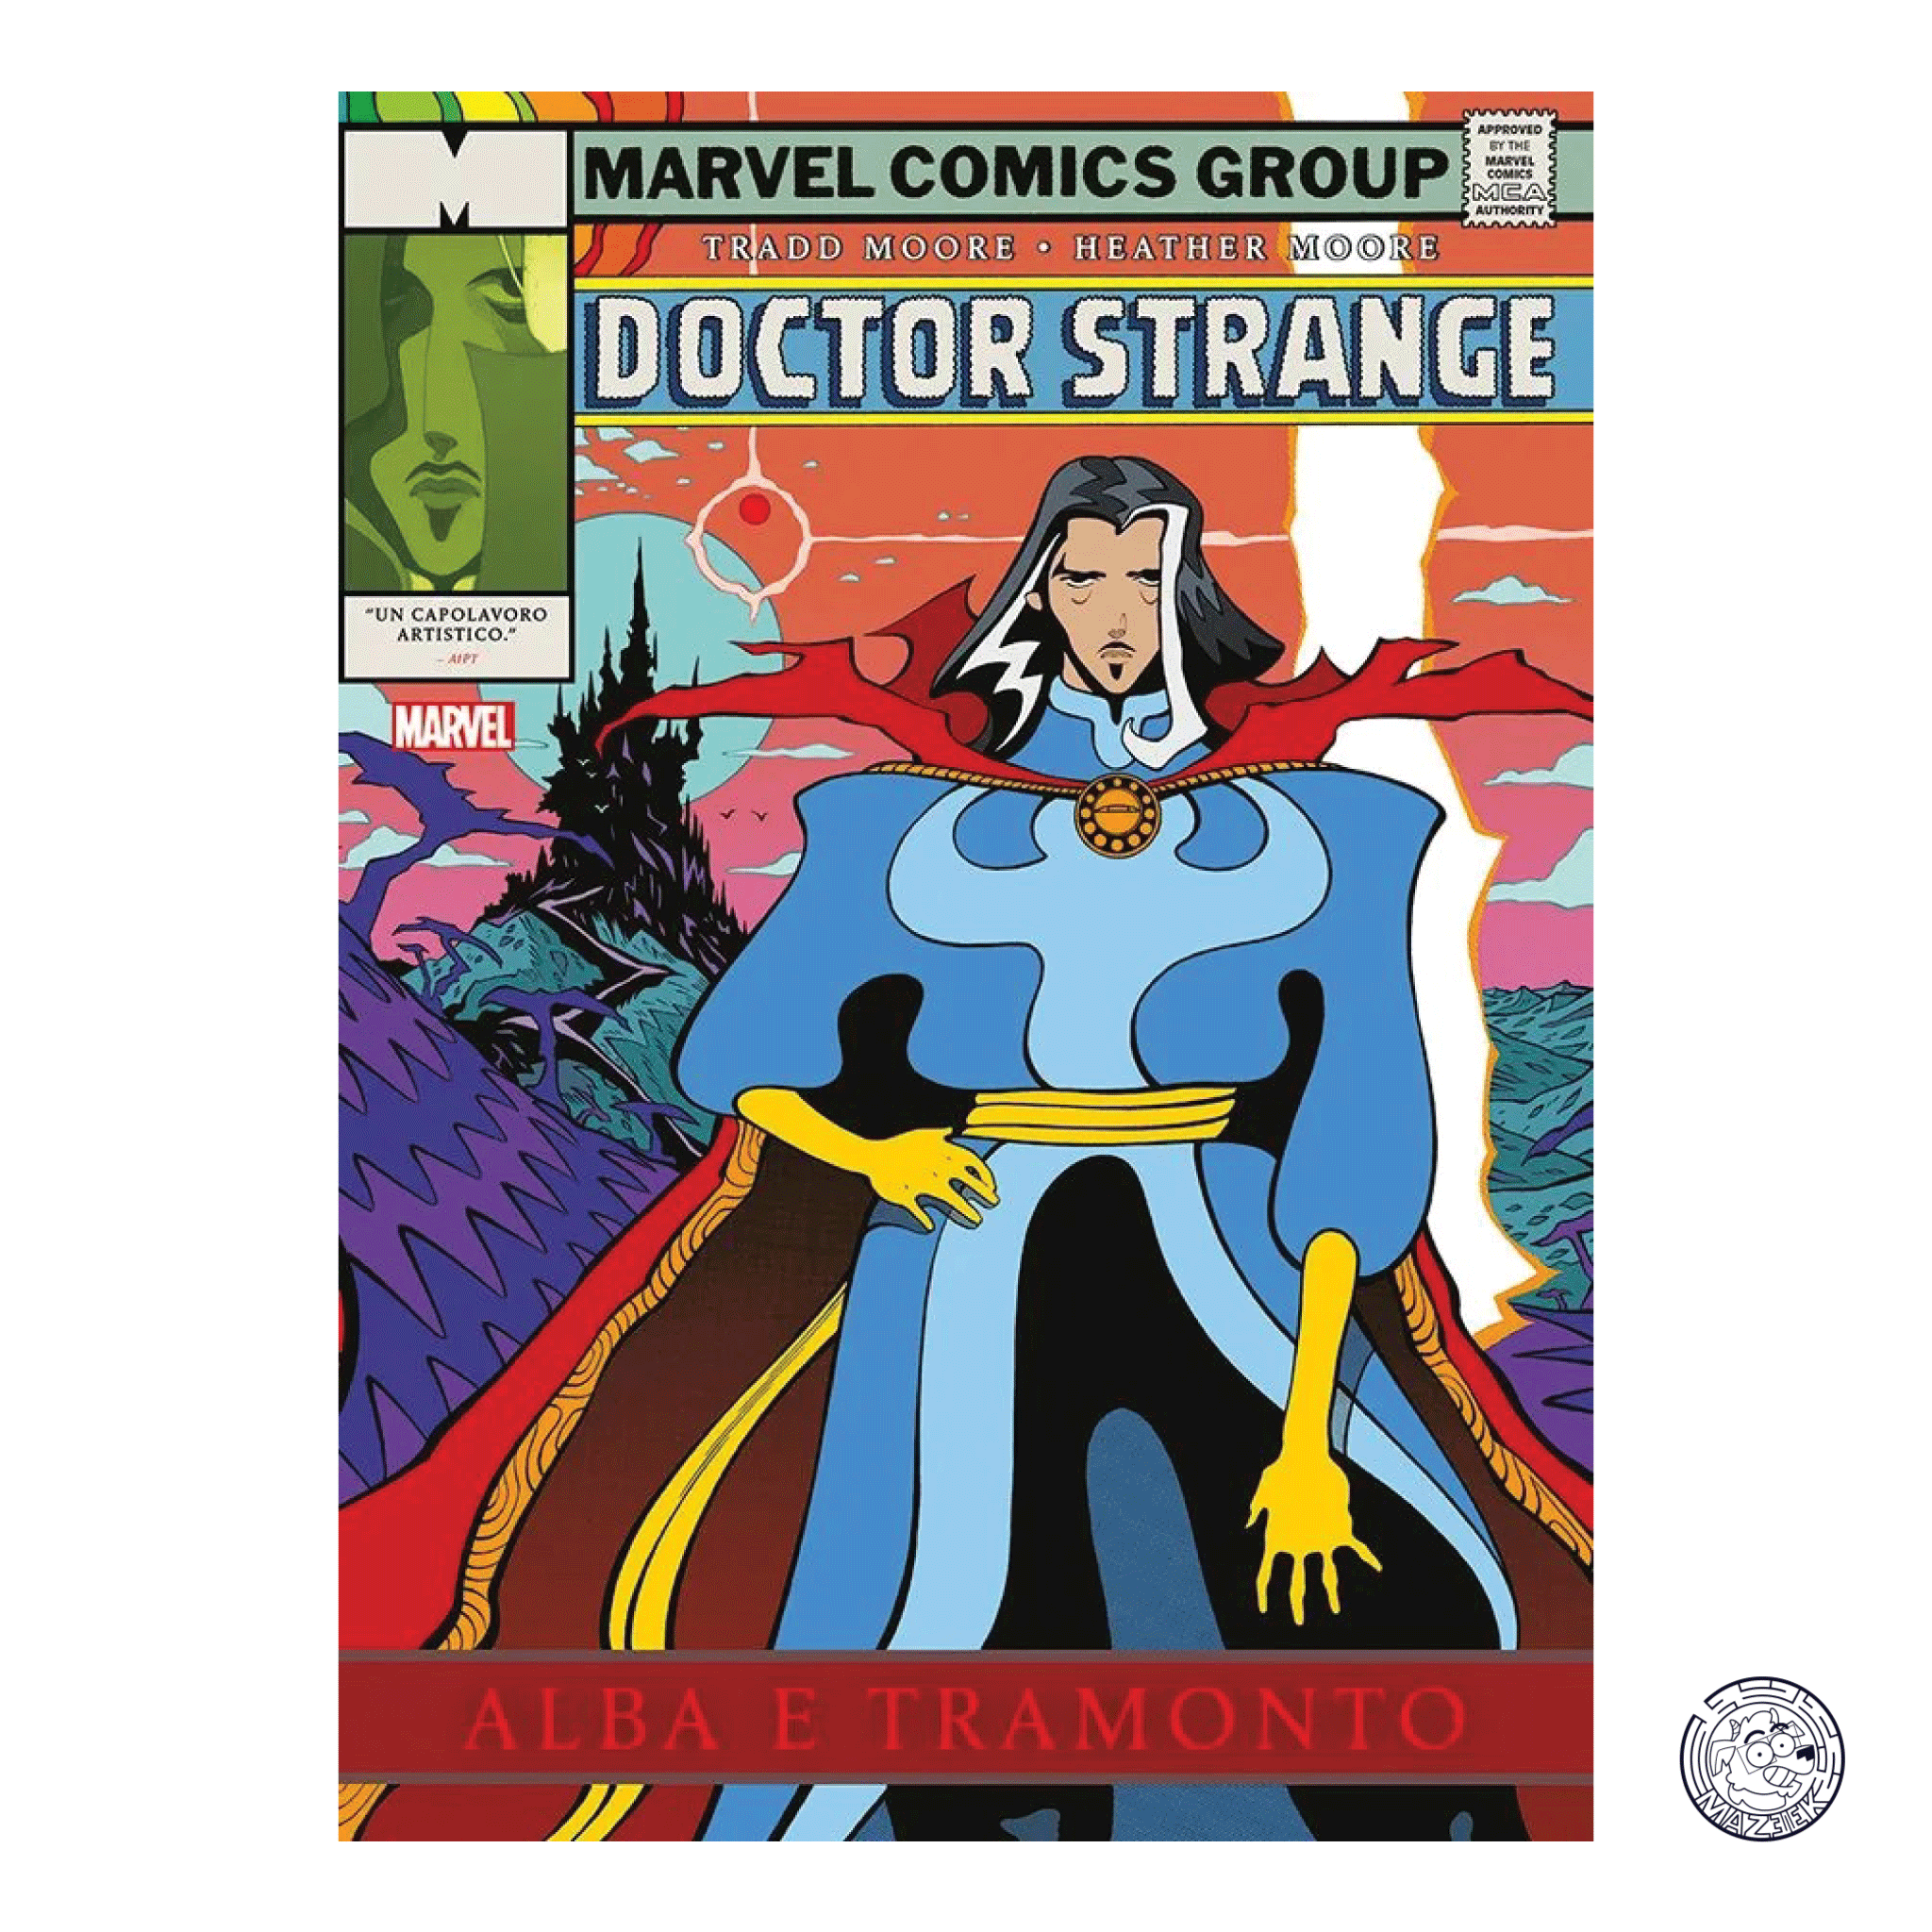 Doctor Strange – Alba e Tramonto